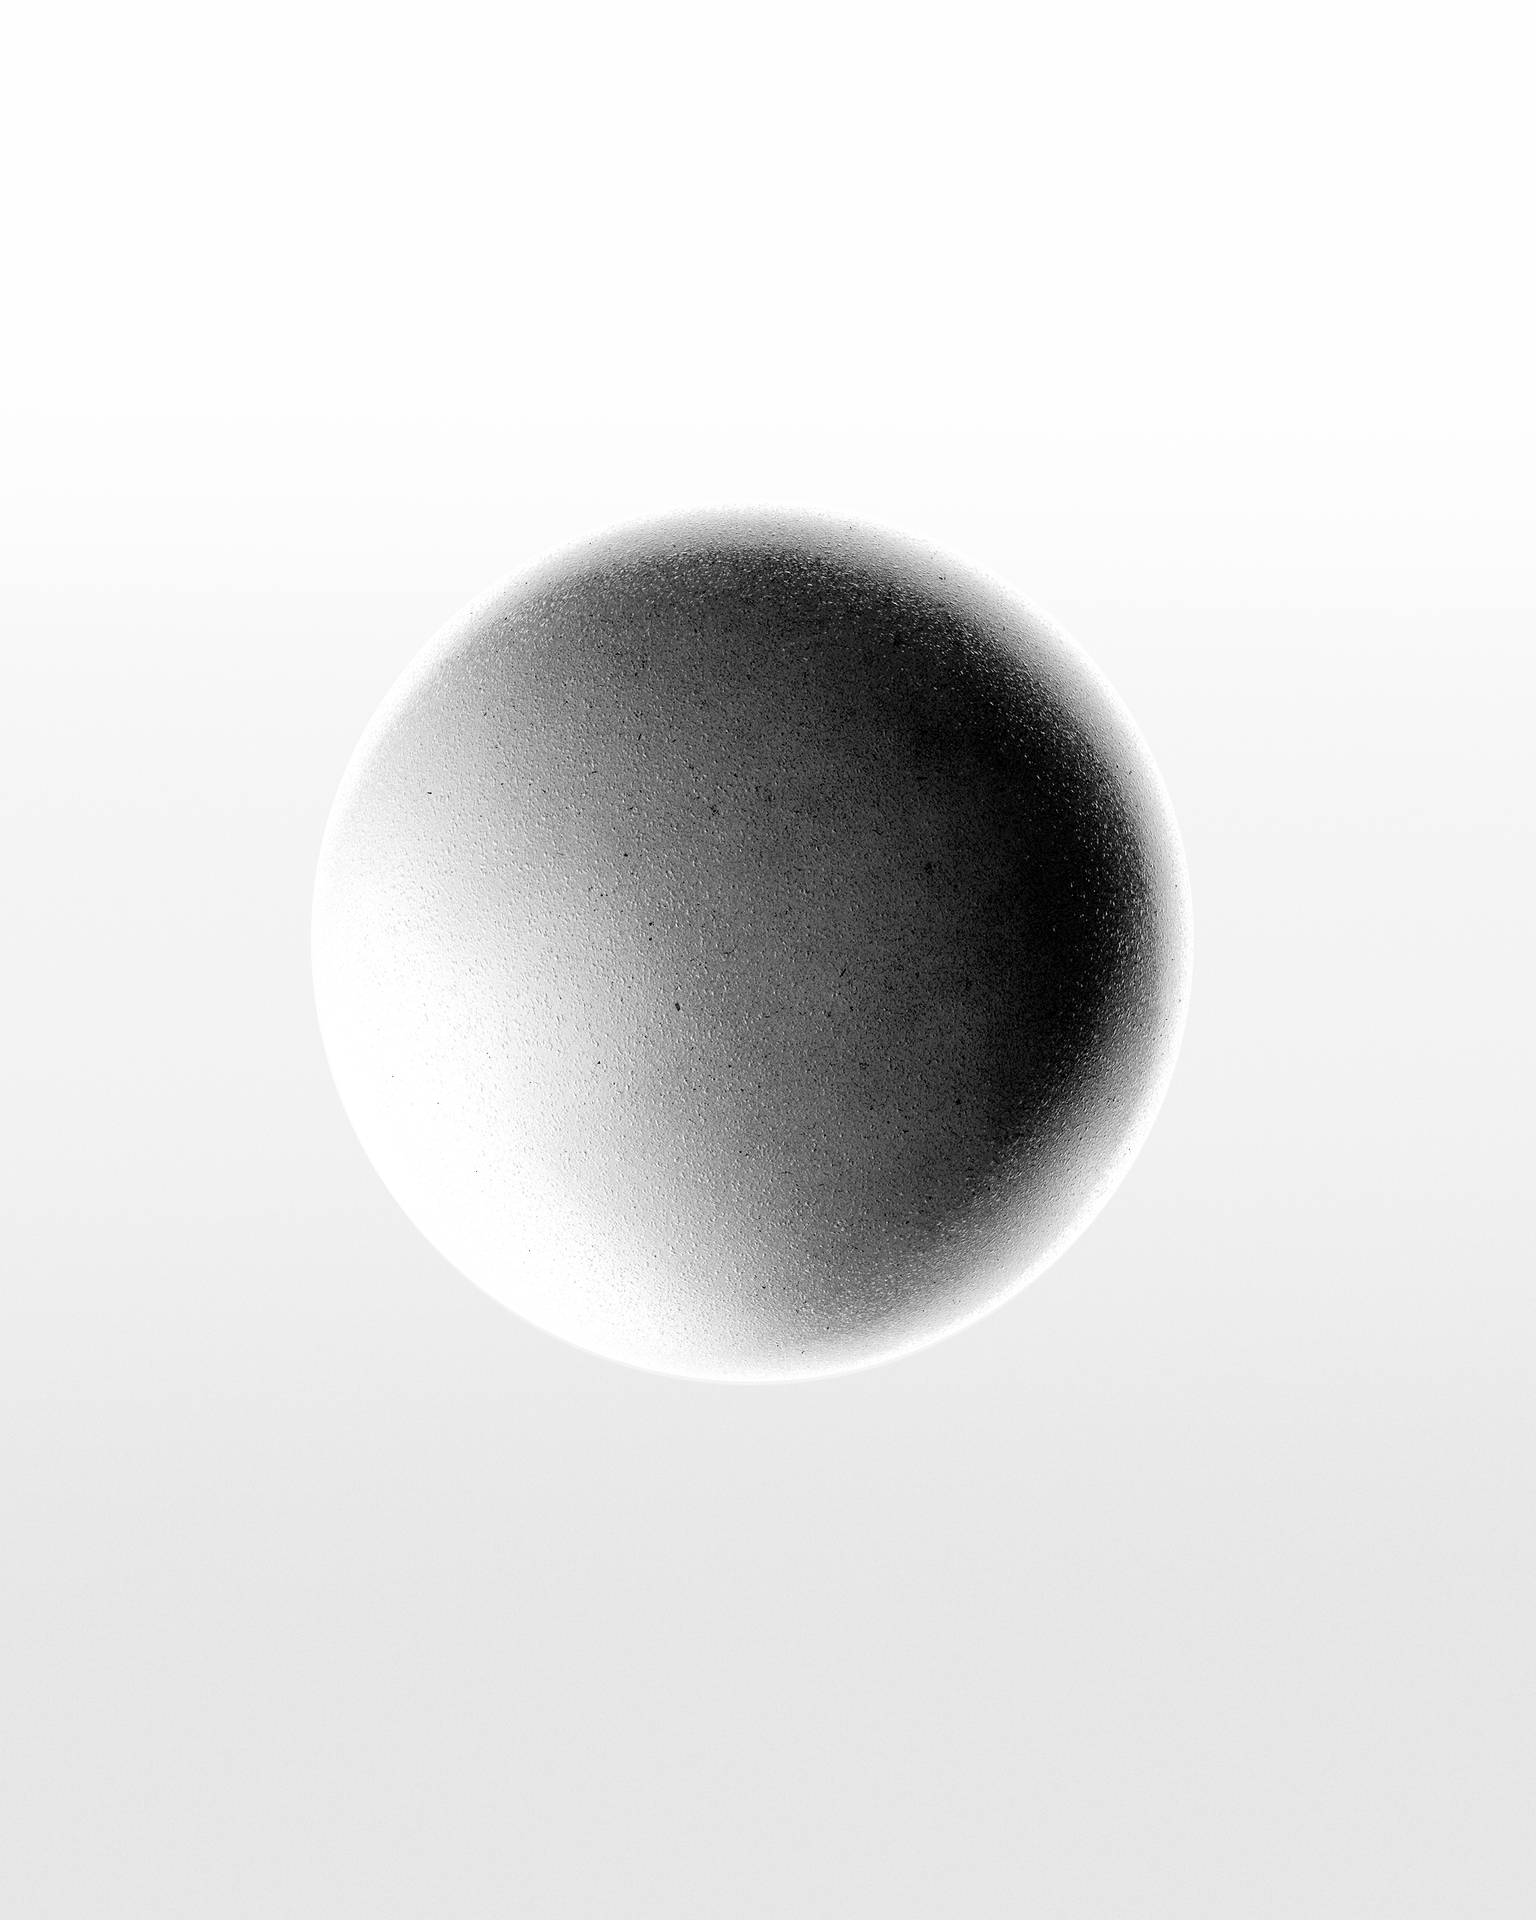 Monochrome Sphere Cg Artwork Wallpaper